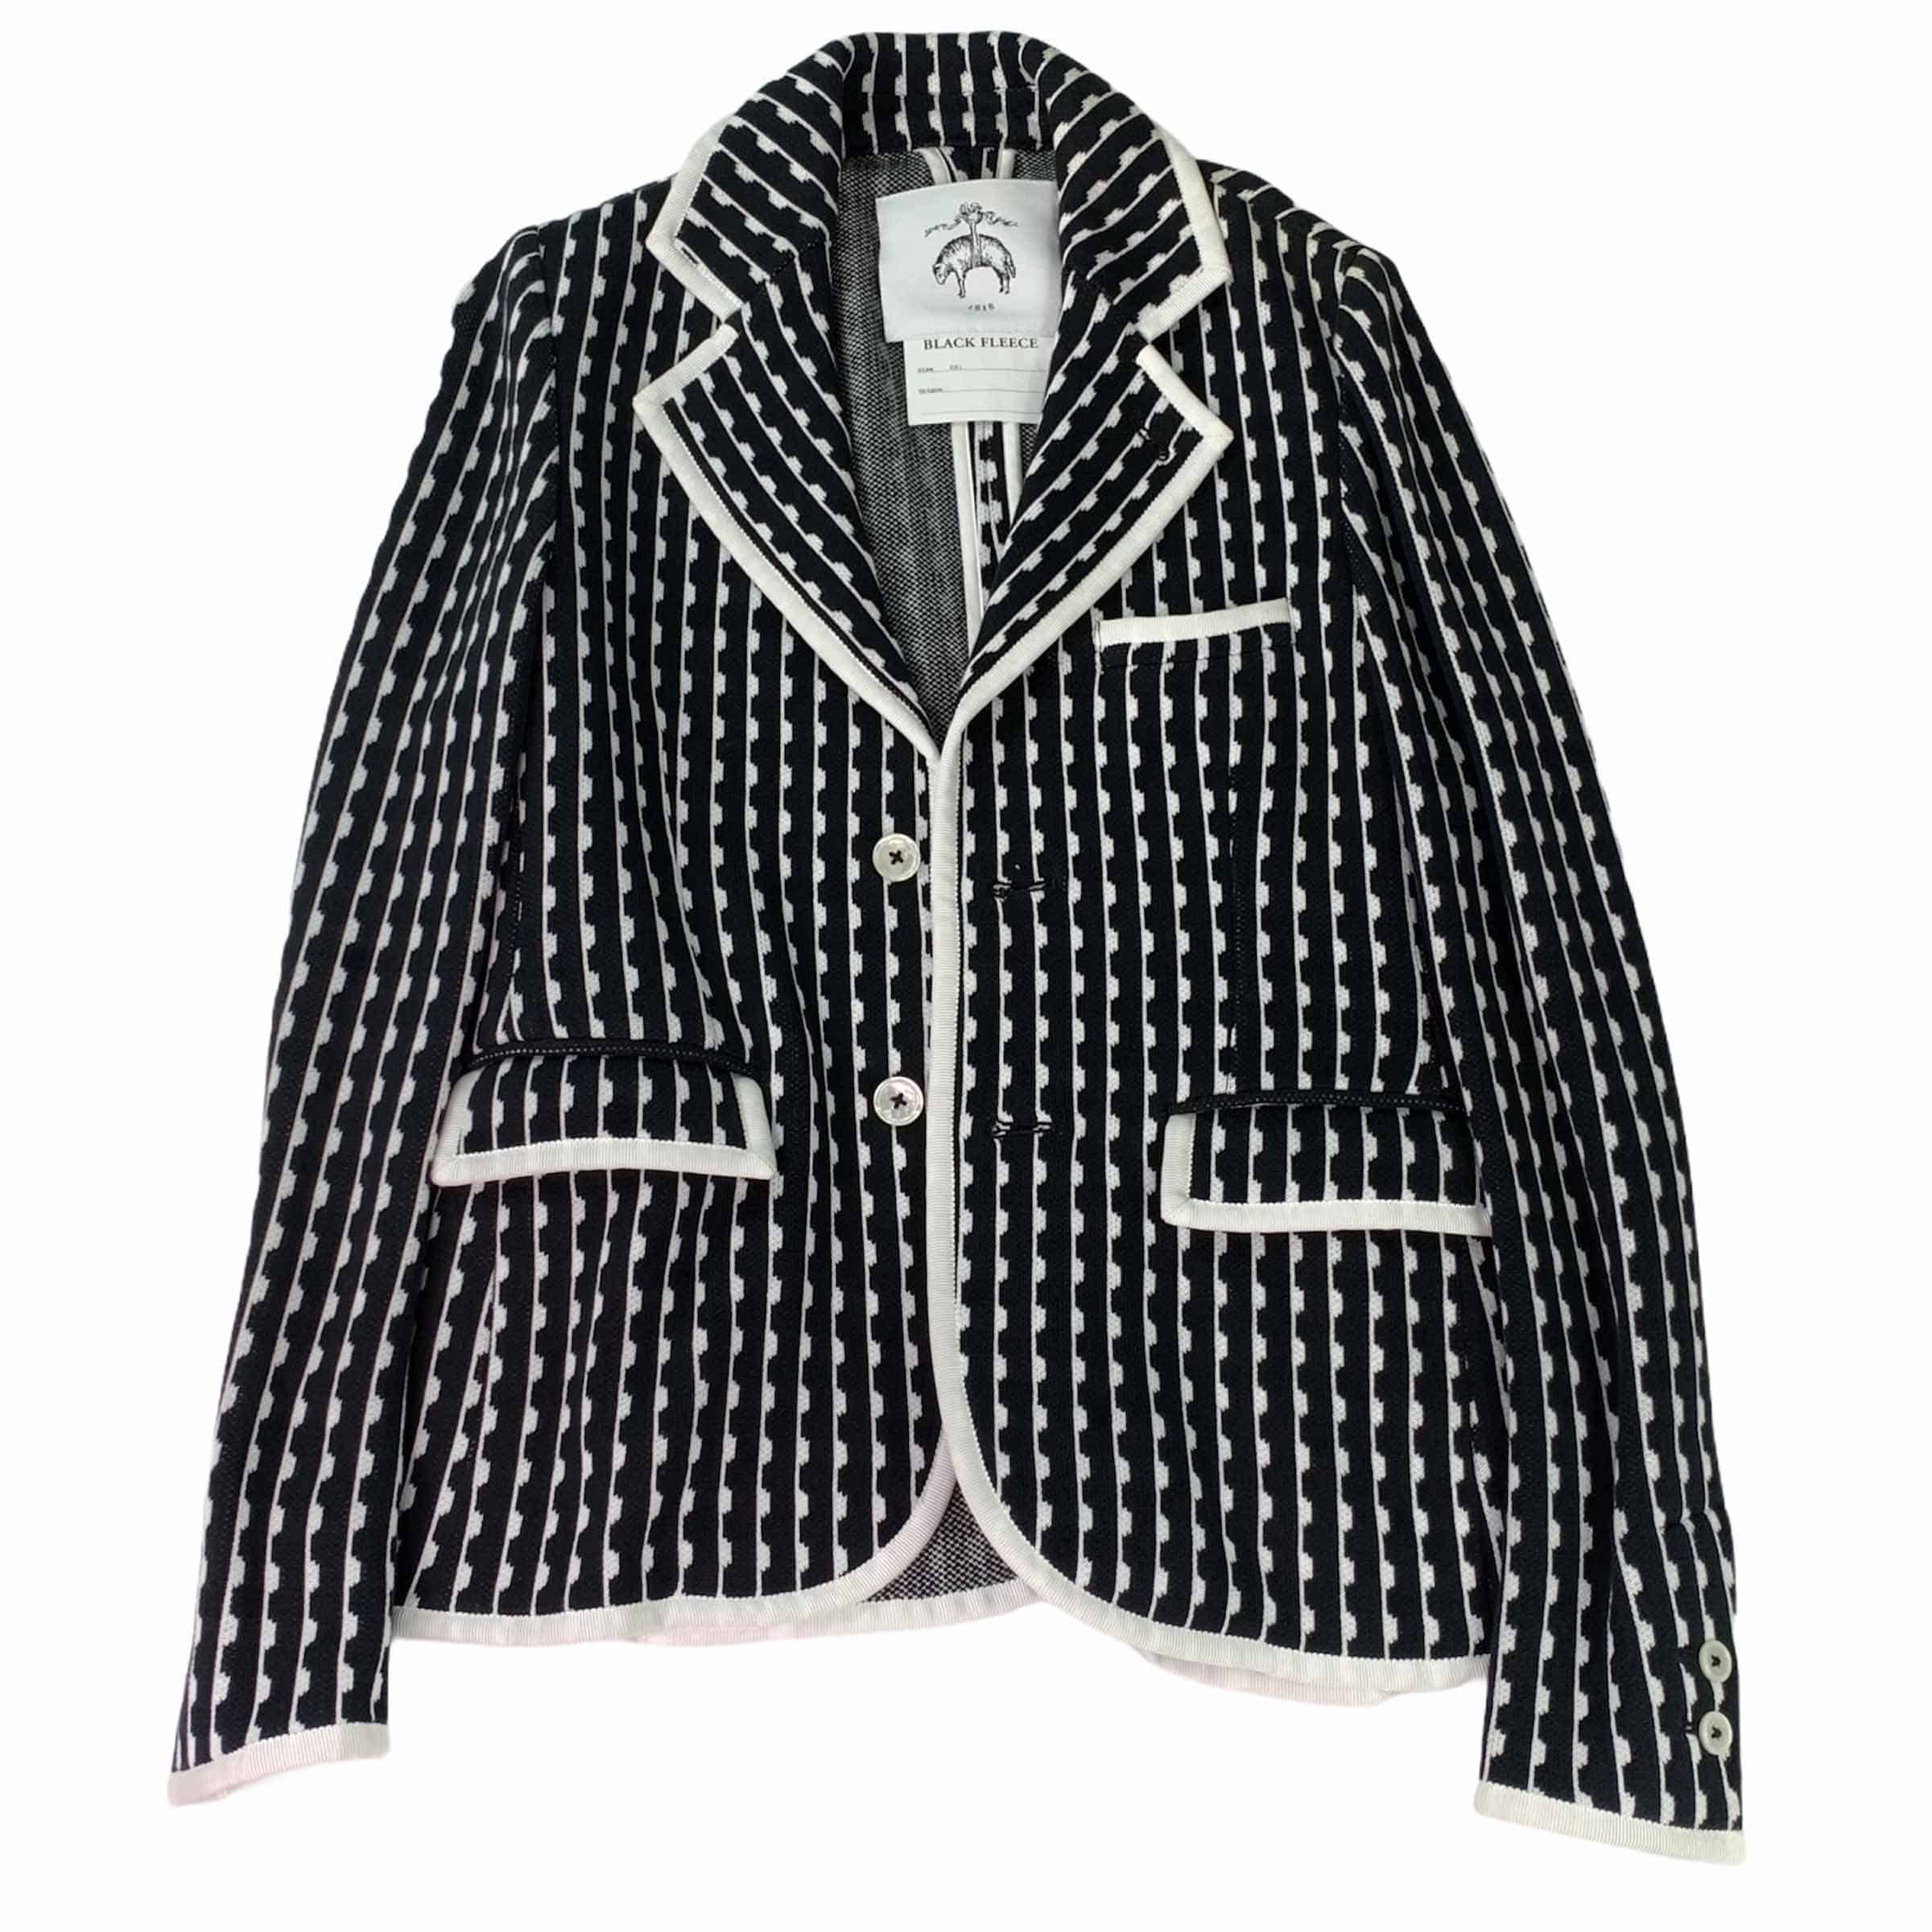 [Black Fleece] Jacquard Knit Jacket  - Size BB1